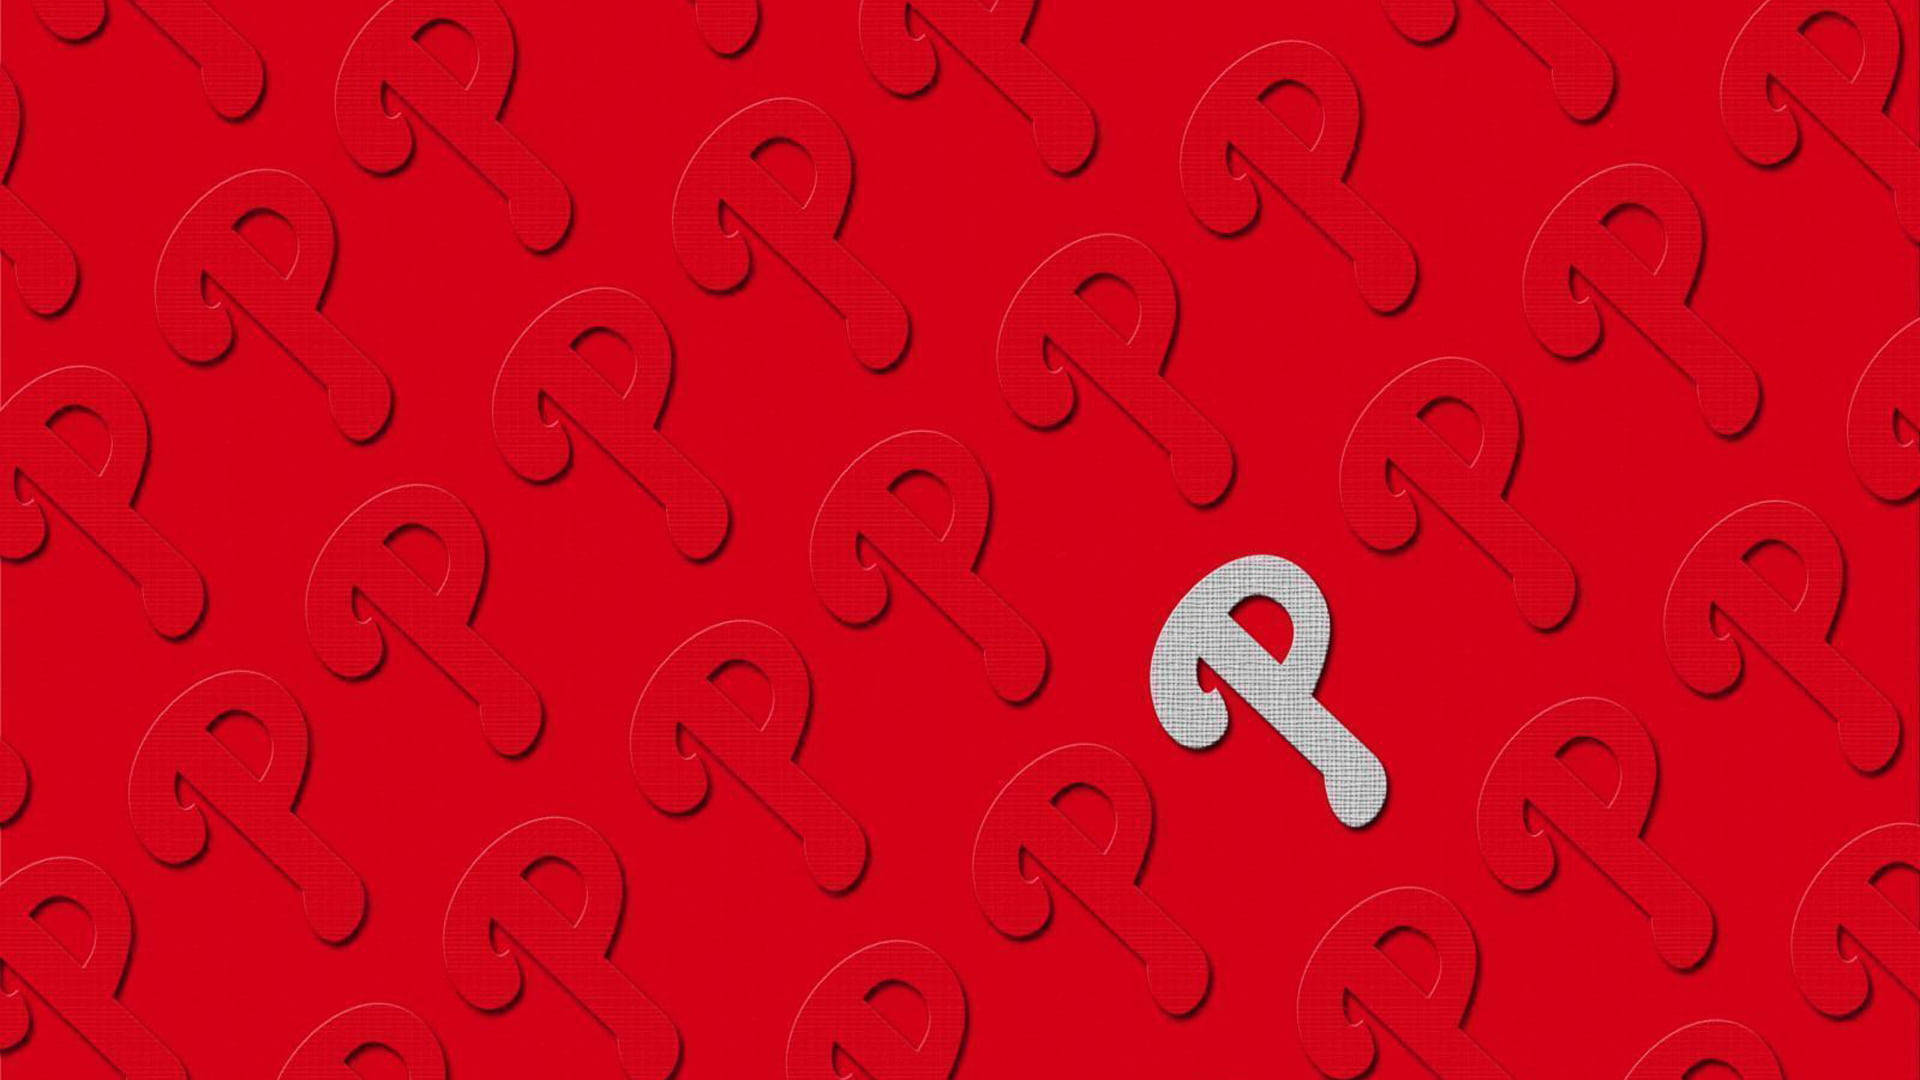 Radiant Red 'p' Letter Image Background